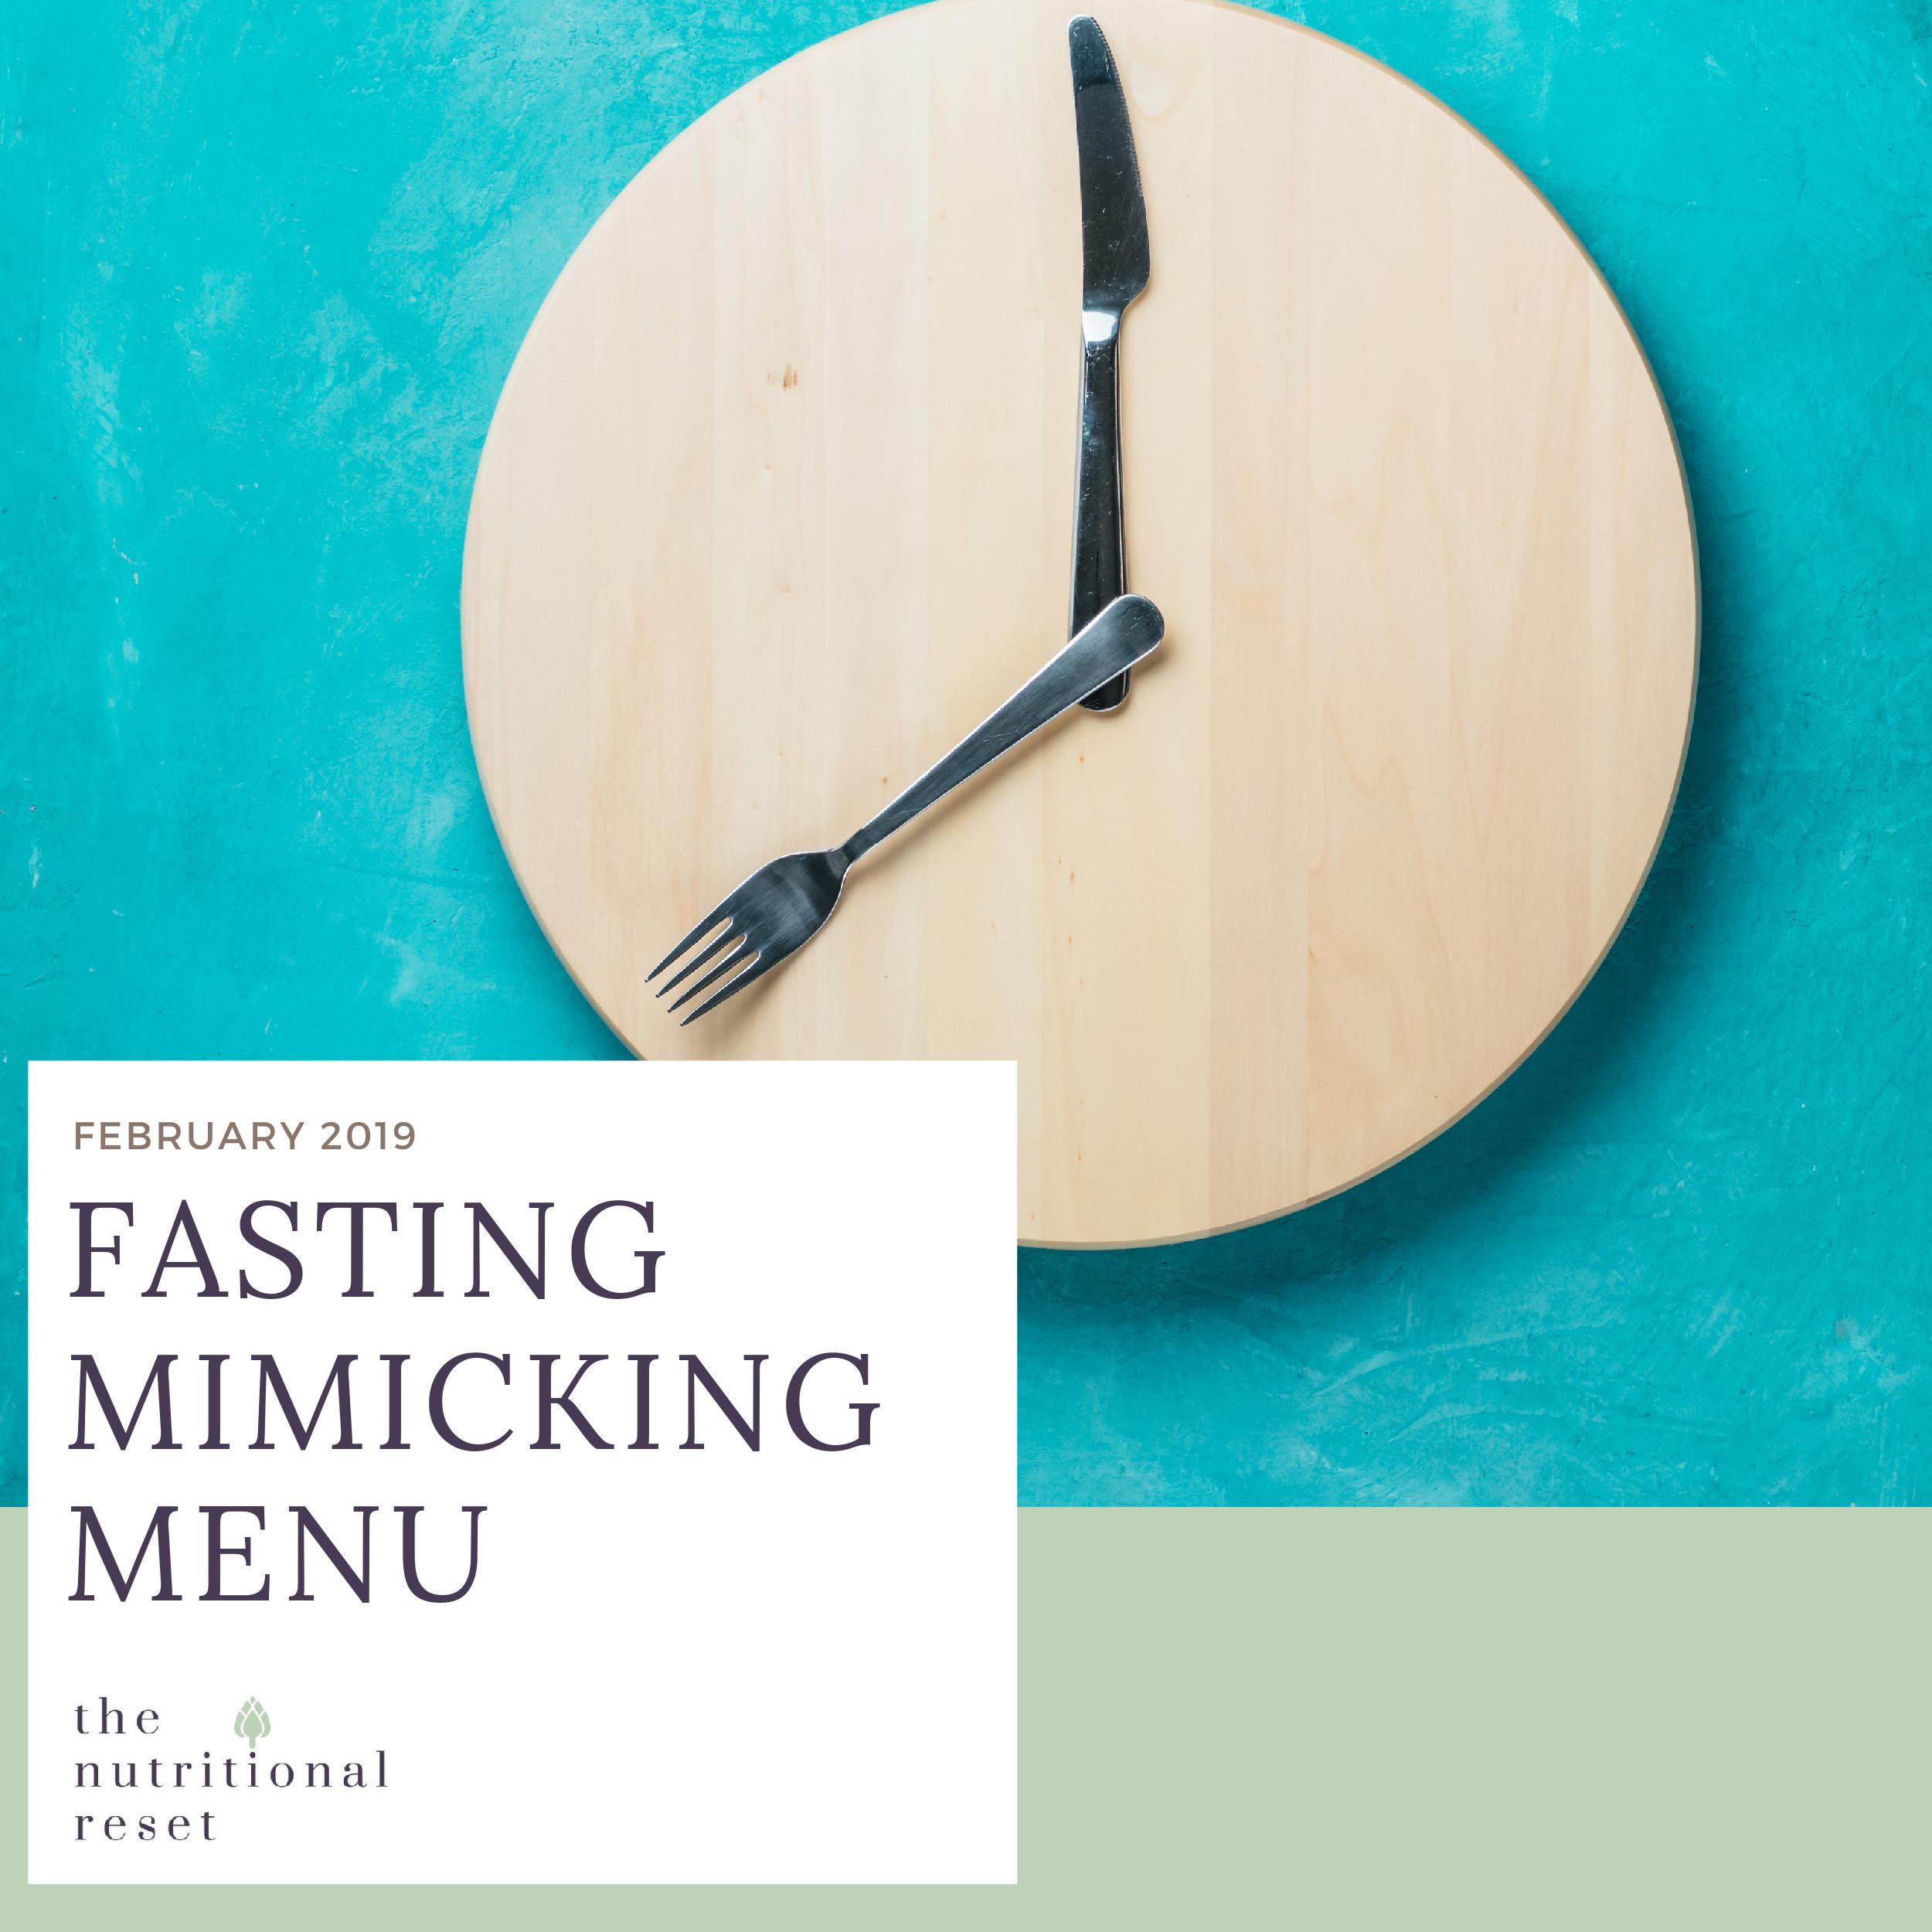 Toronto Holistic Nutritionist Laurie McPhail Fasting Mimicking Menu